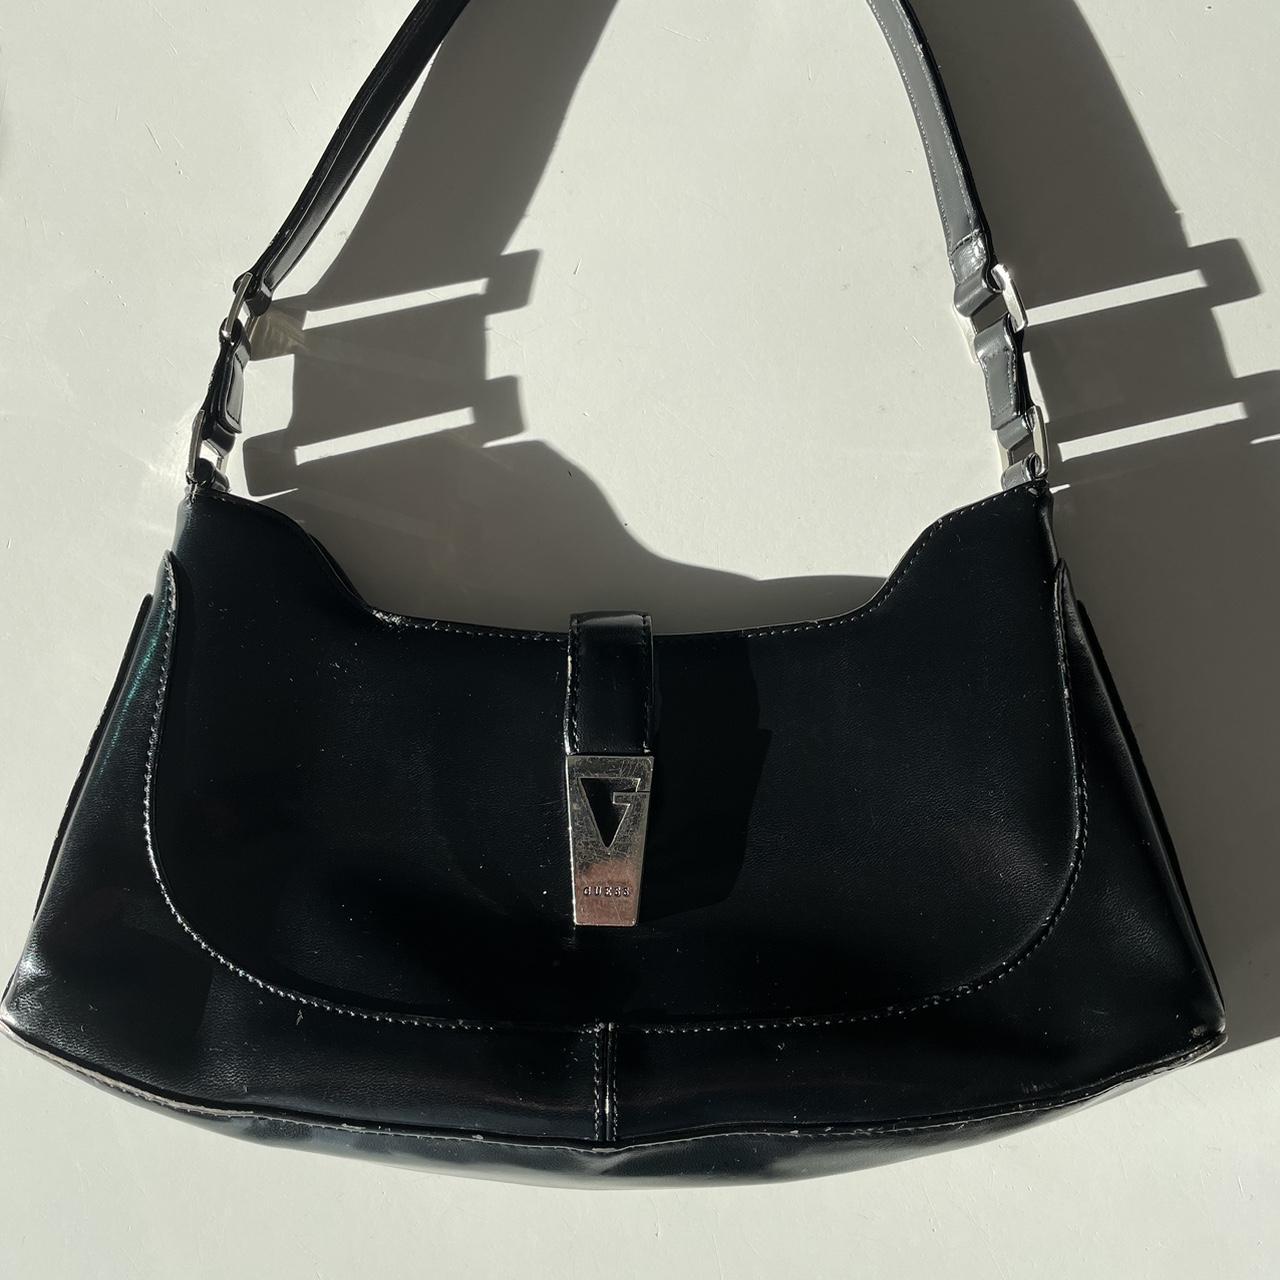 Guess Bag Review and Unboxing | Maila Convertible Bag & Virtual Mini  Crossbody Flap Bag - YouTube